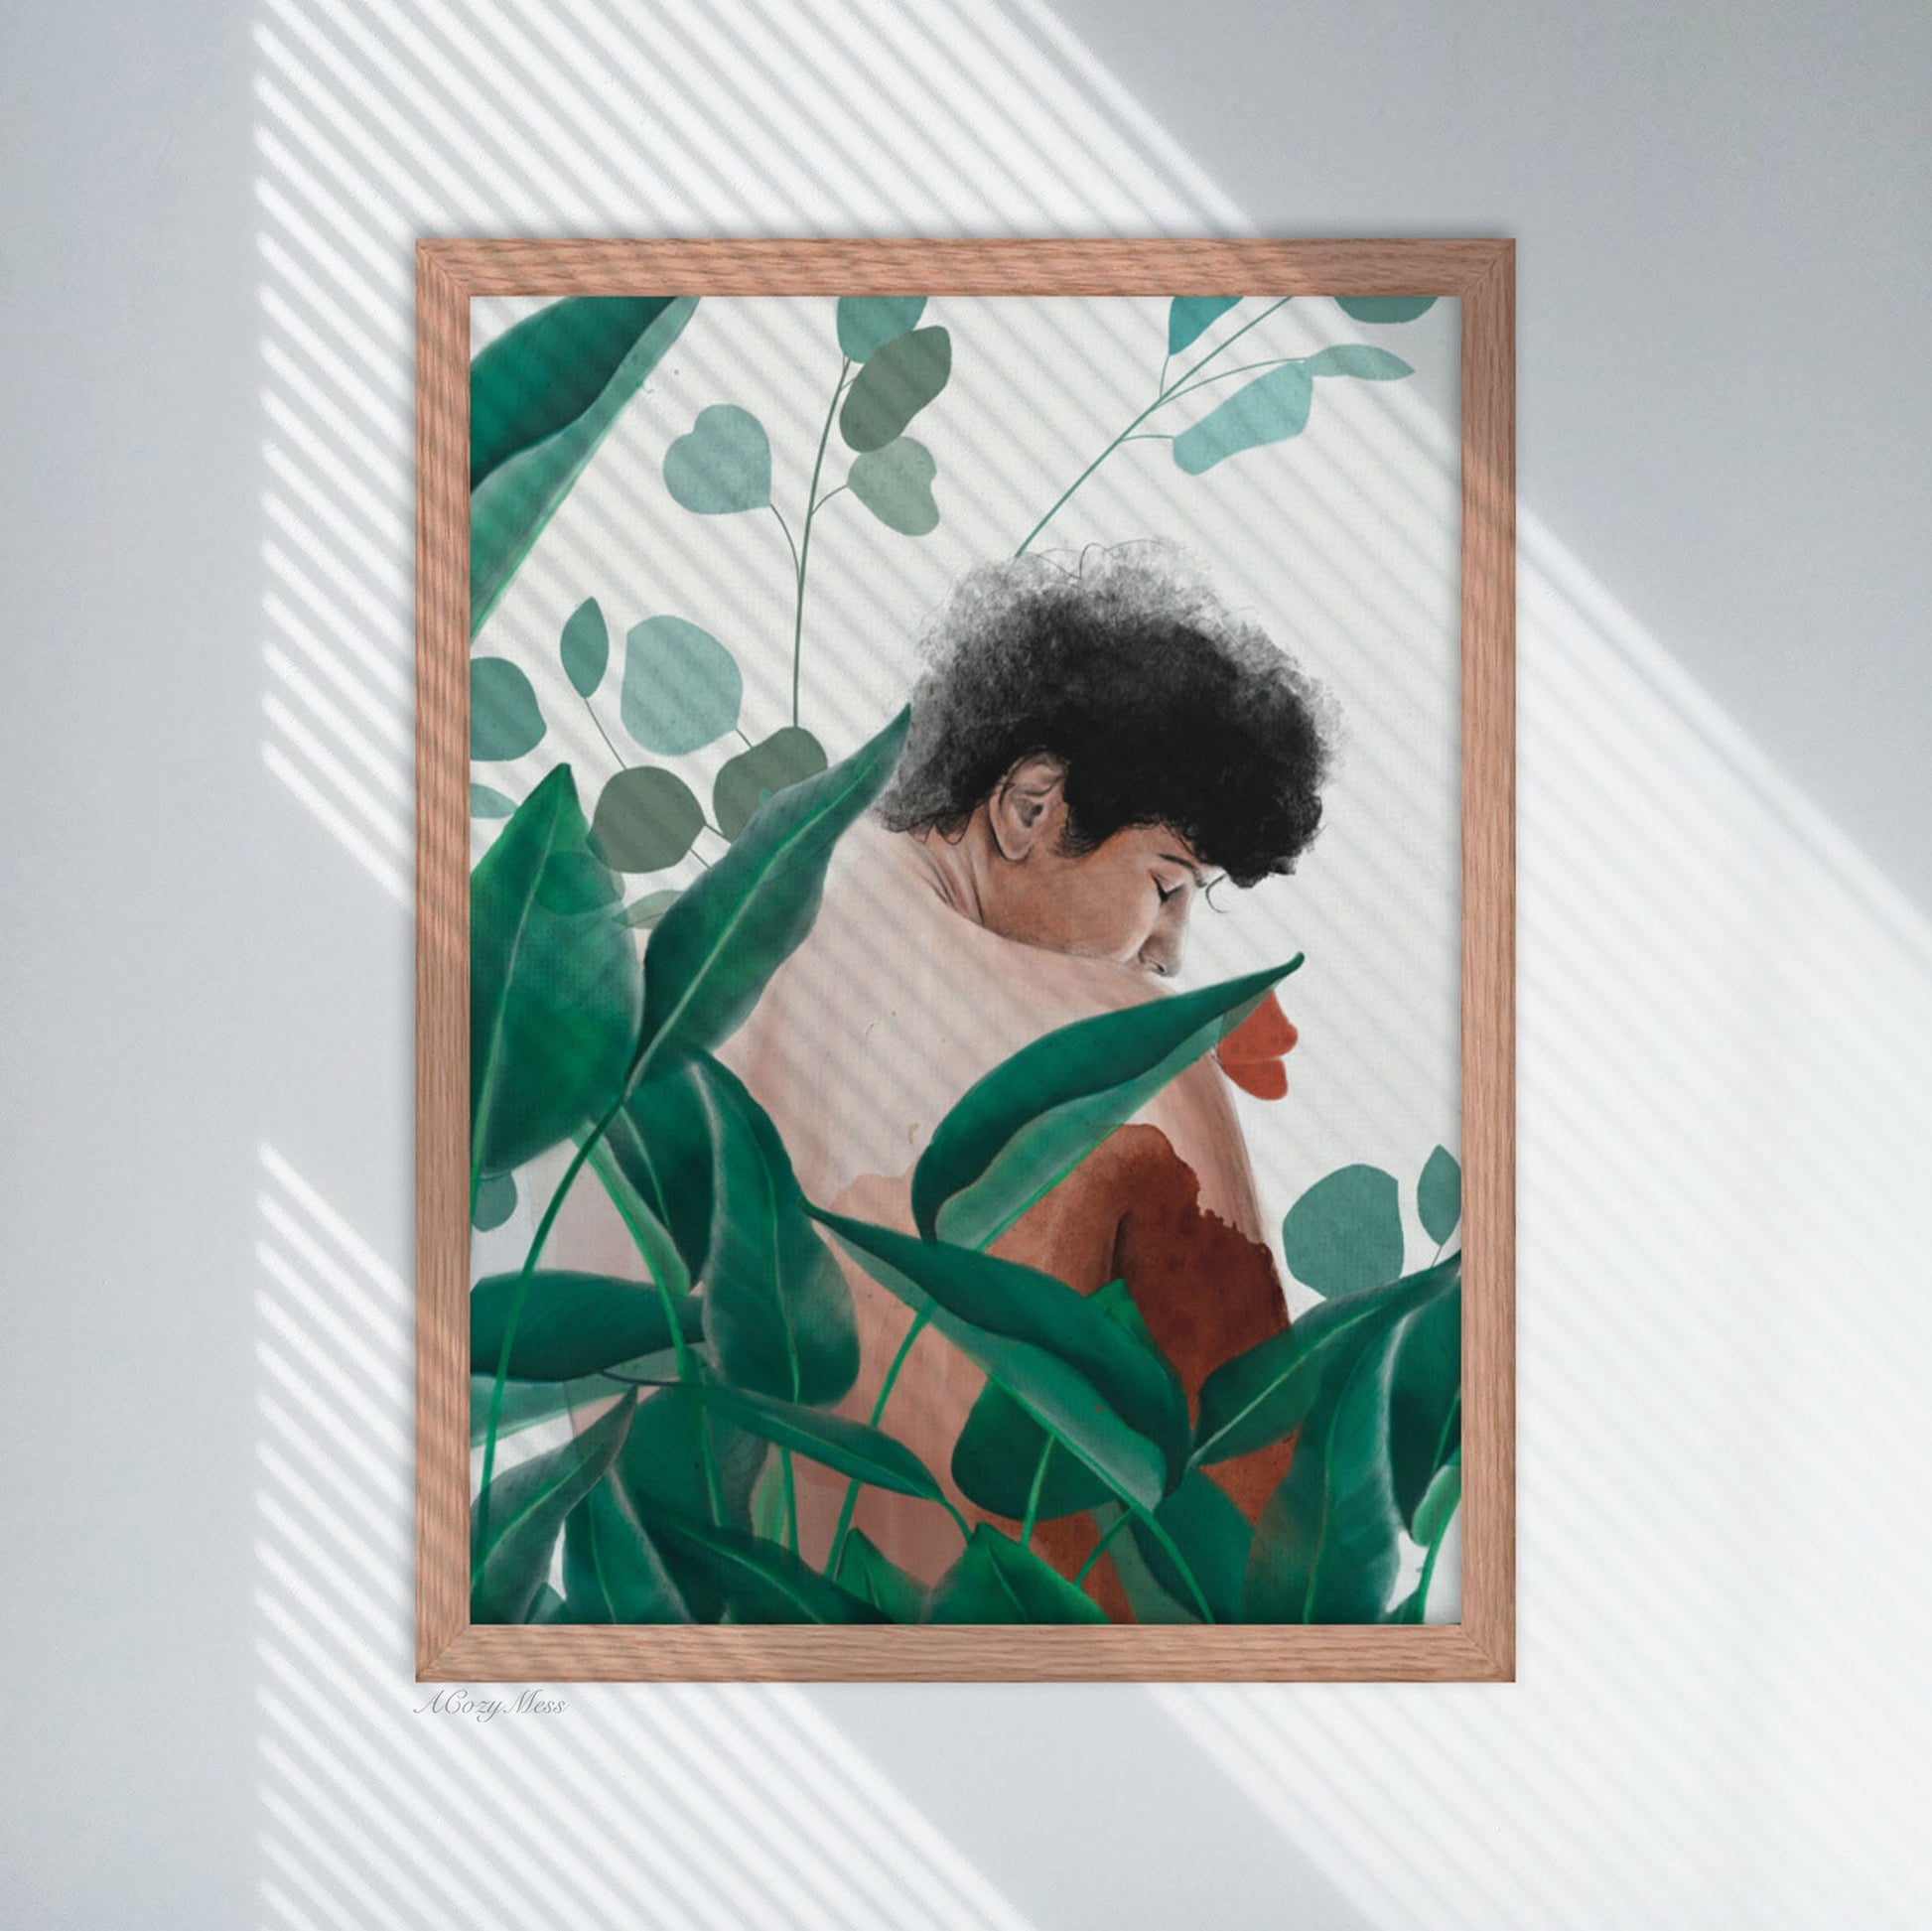 Plant Lovers, Man Art Print, Portrait Art, Wall Art Poster, Giclée printing quality